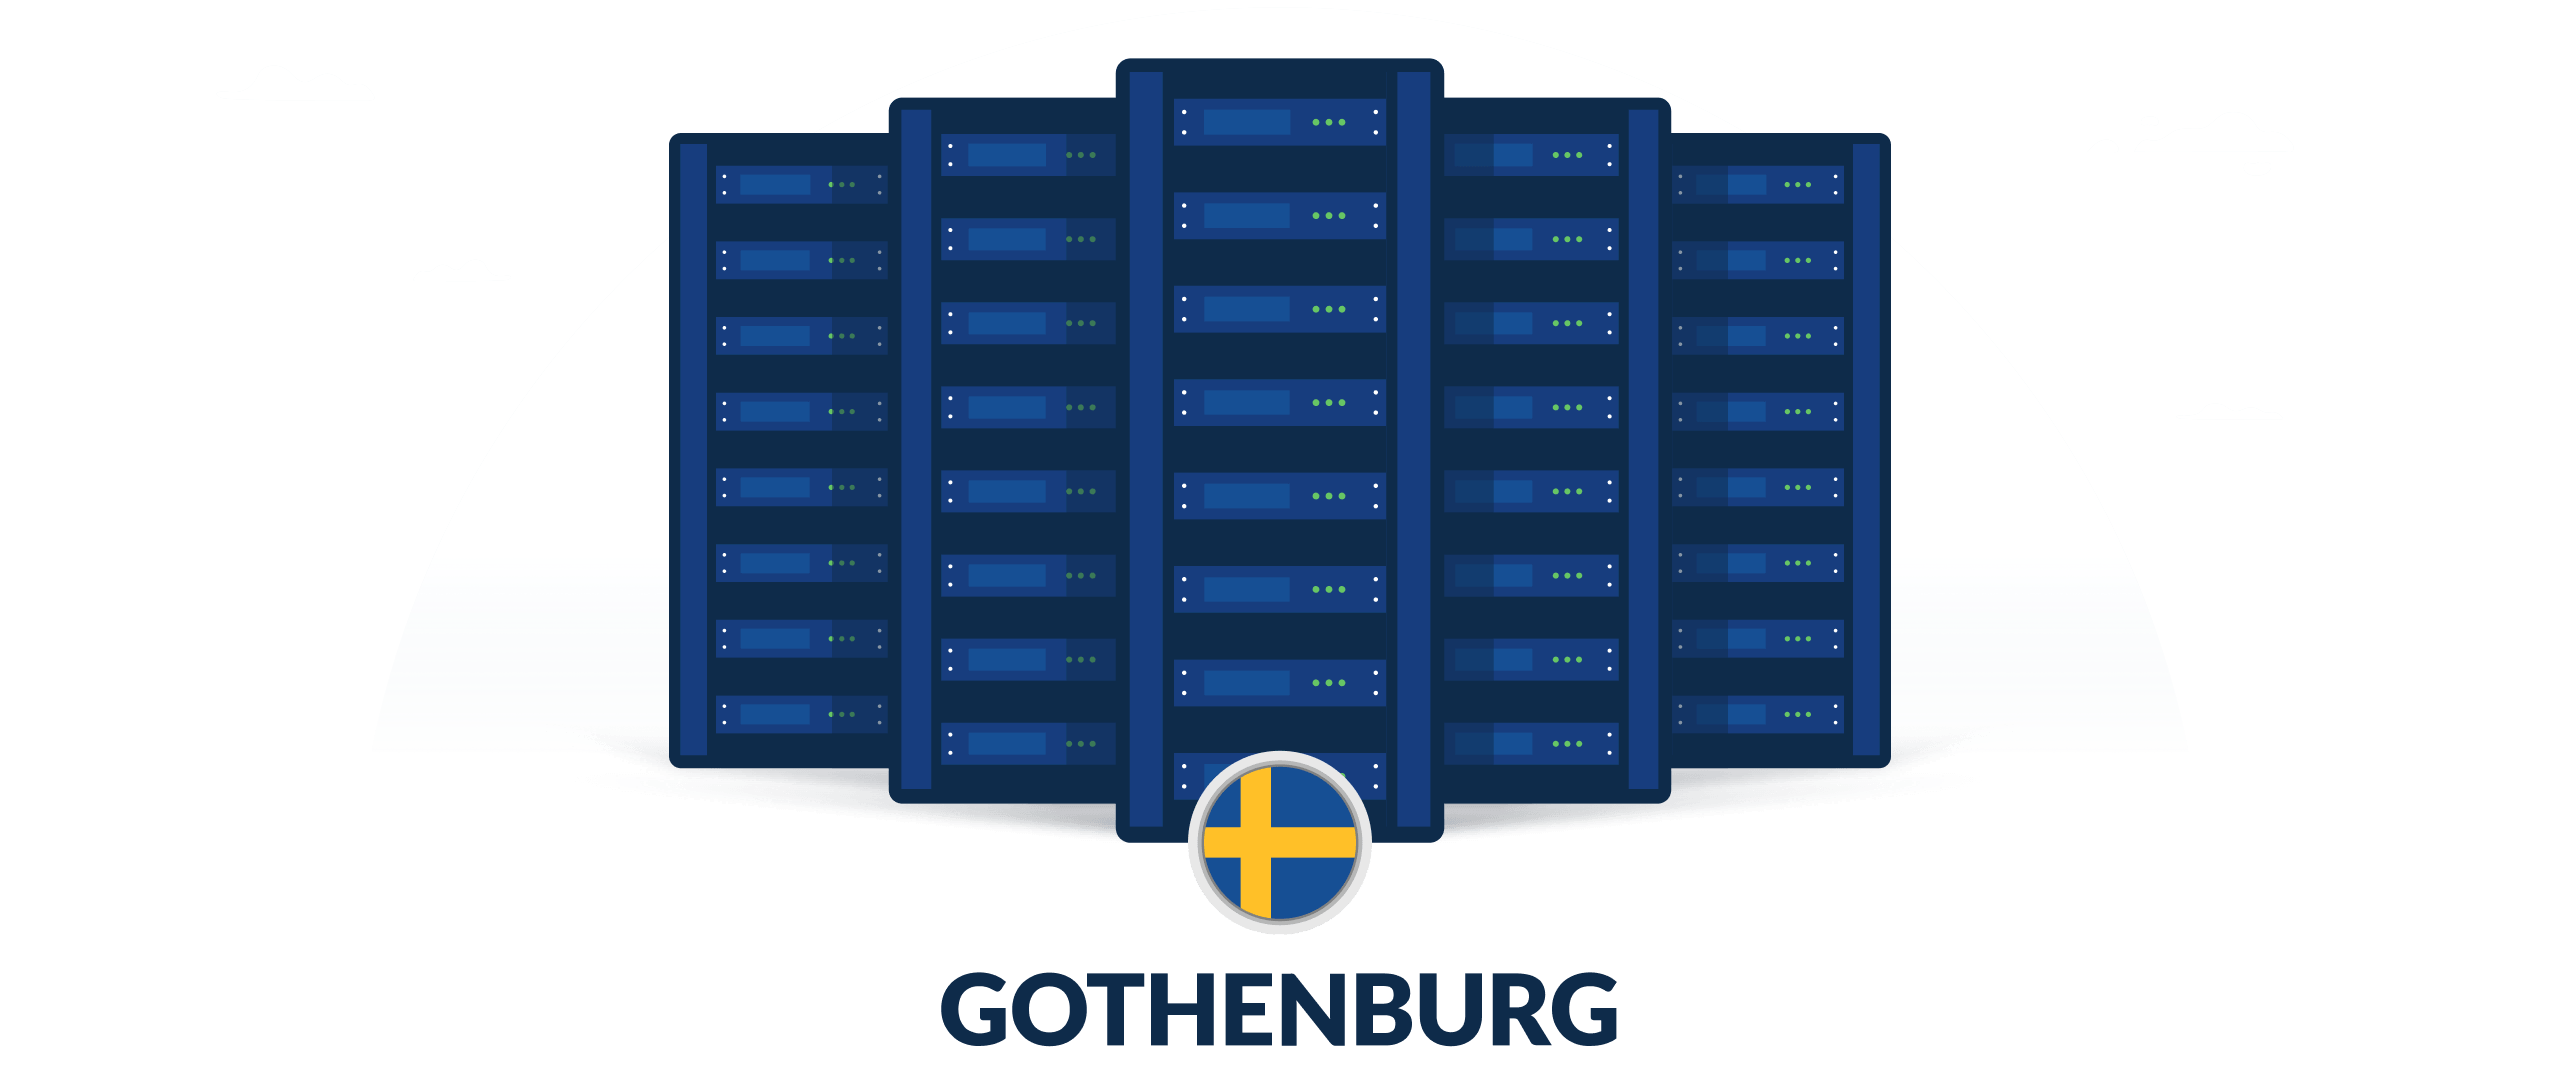 VPN servers in Gothenburg, Sweden